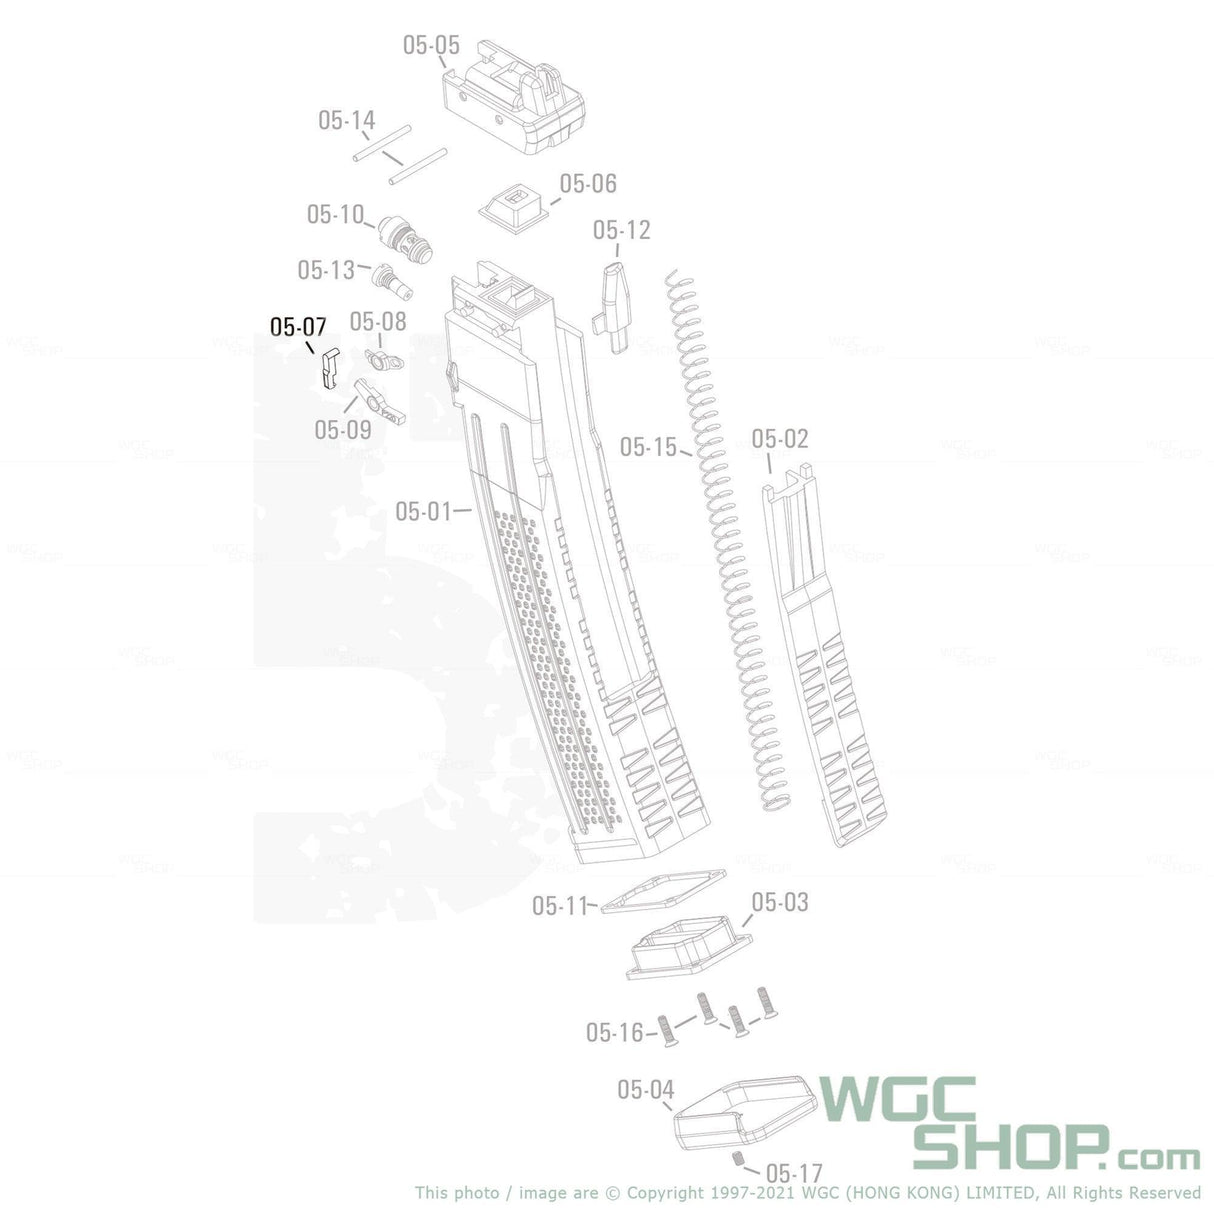 APFG Original Parts - MPX GBB Magazine Rocker Arm Detent ( 05-07 ) - WGC Shop